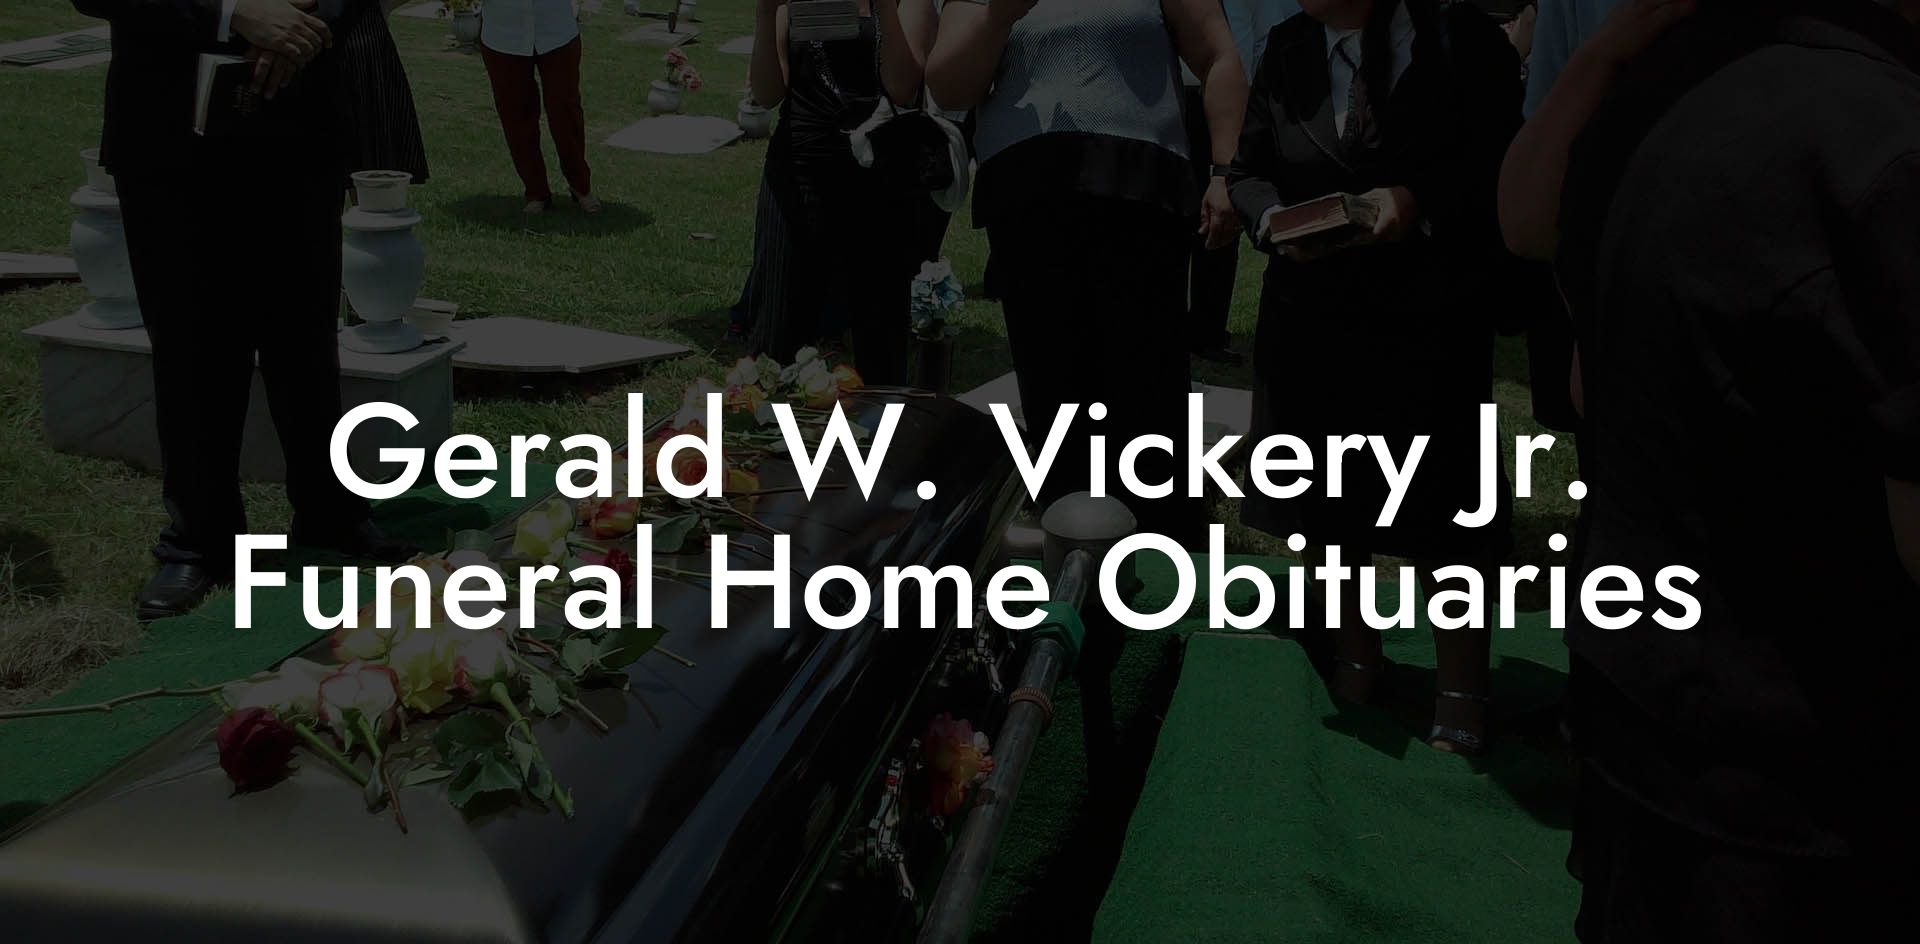 Gerald W. Vickery Jr. Funeral Home Obituaries